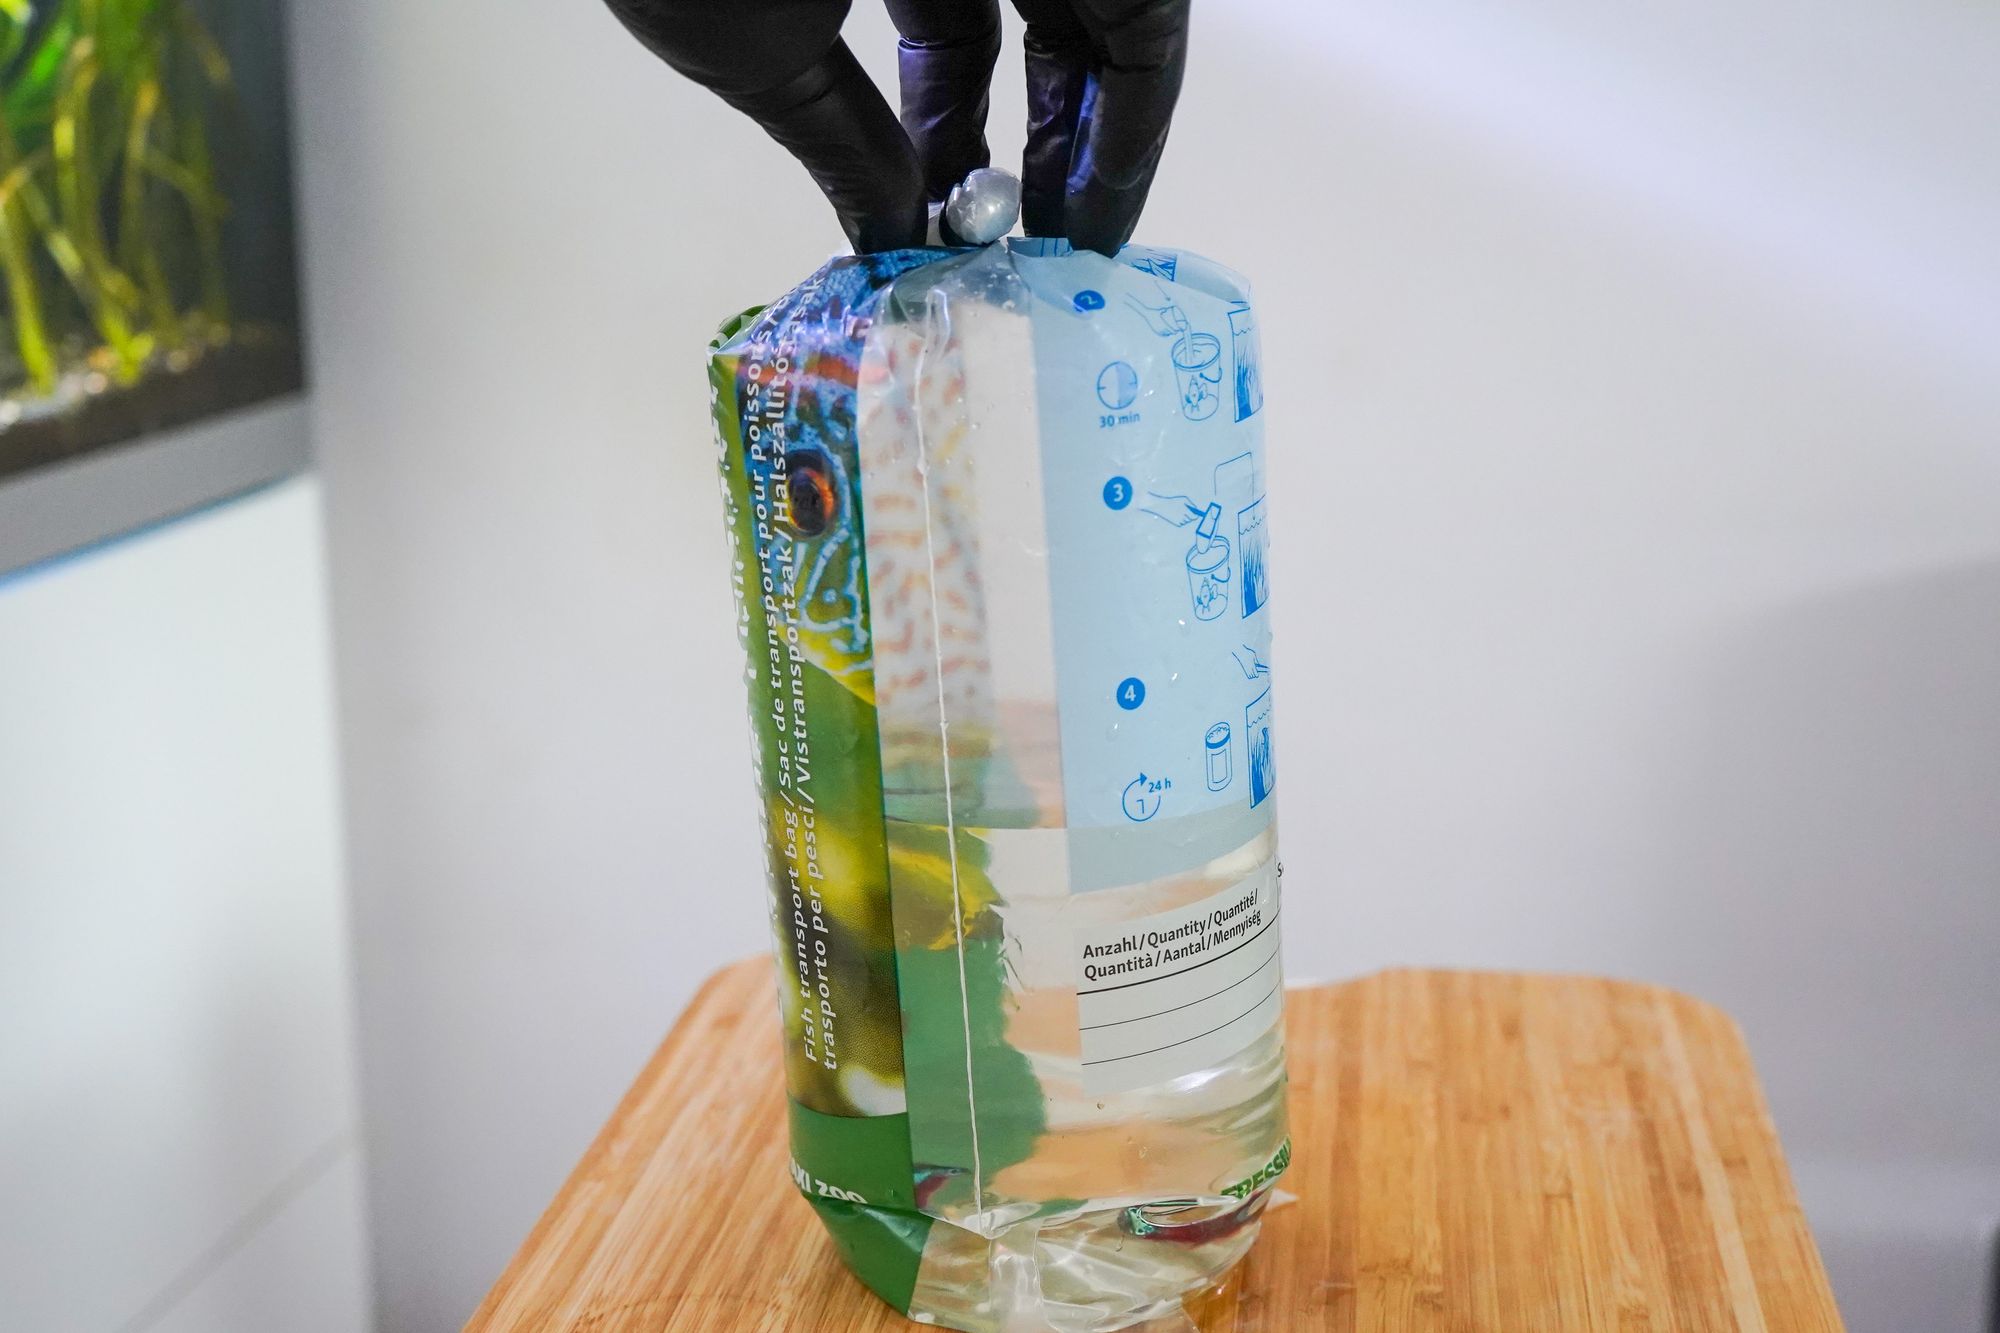 How to drip acclimate aquatic animals